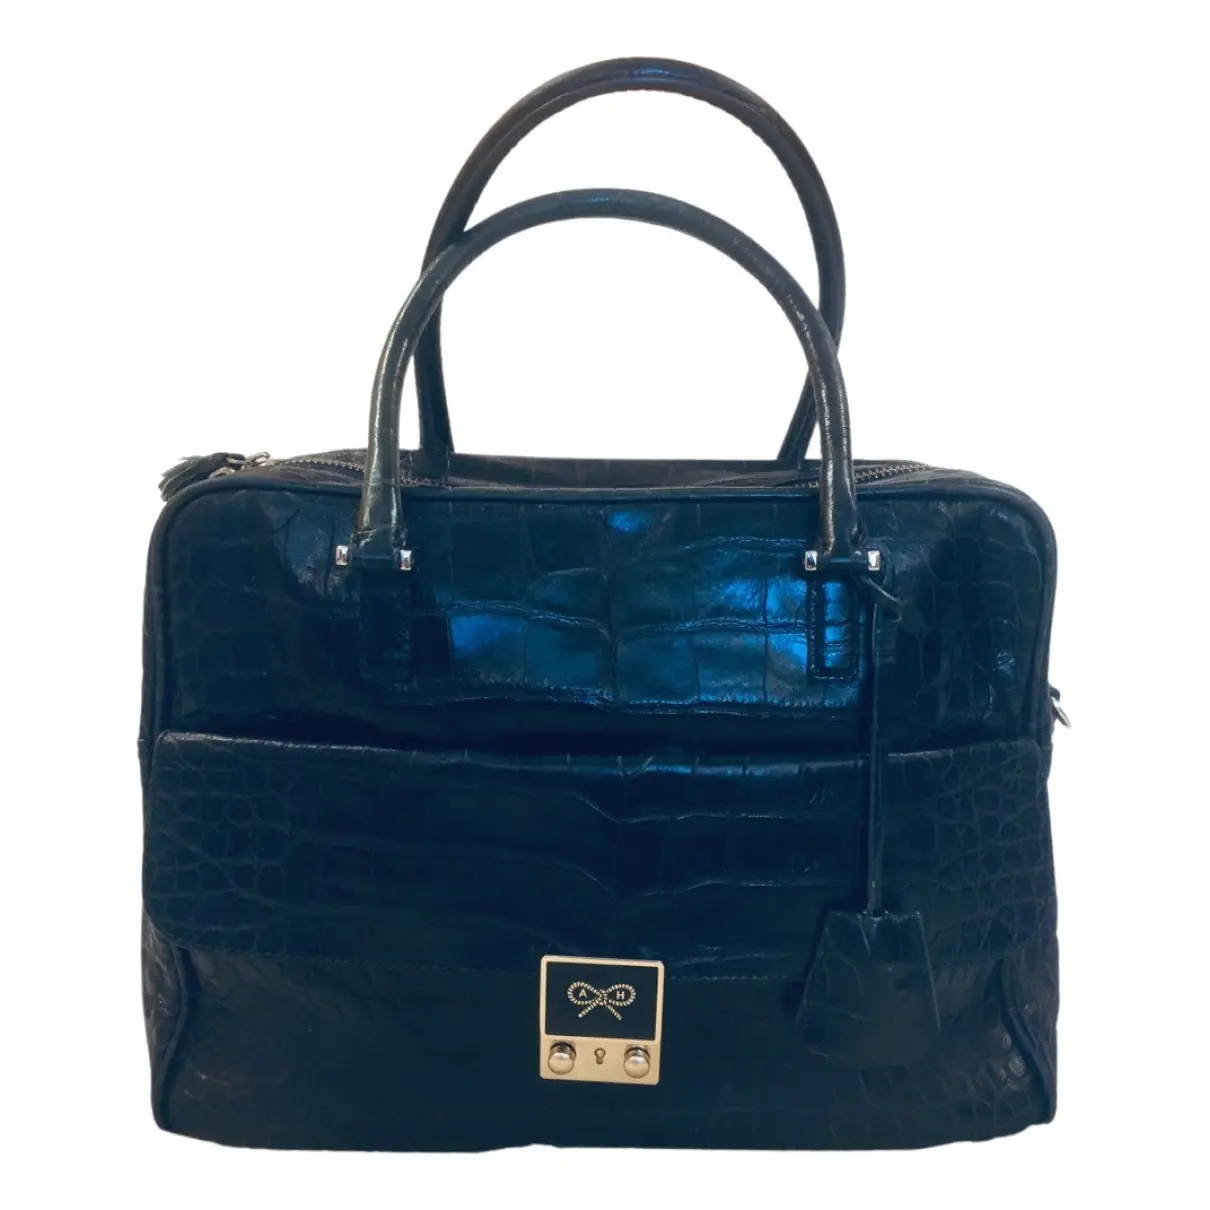 Pimlico leather handbag Anya Hindmarch - Vintage